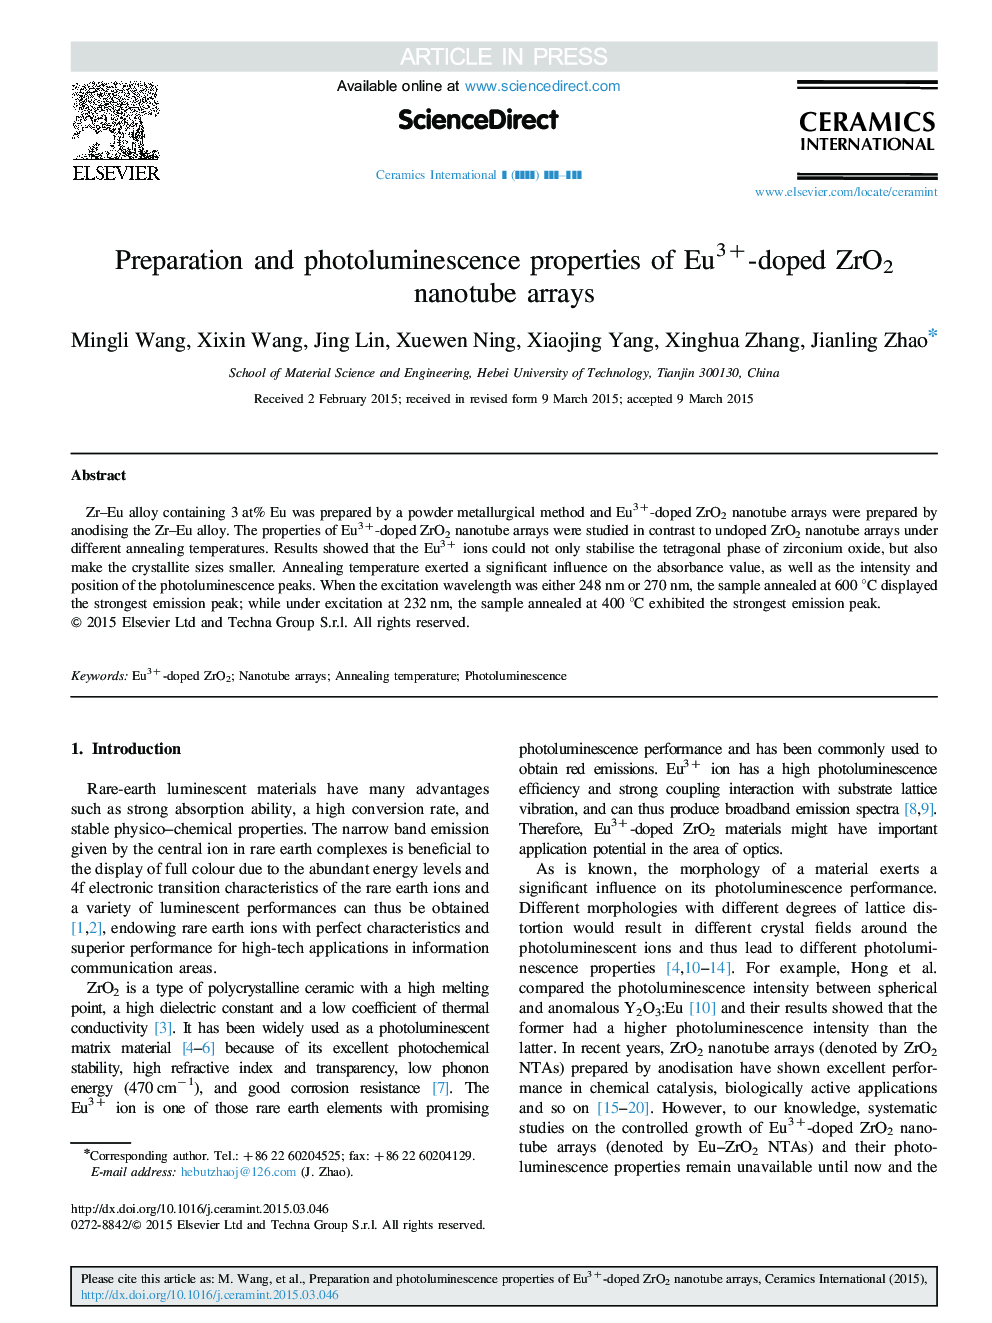 Preparation and photoluminescence properties of Eu3+-doped ZrO2 nanotube arrays